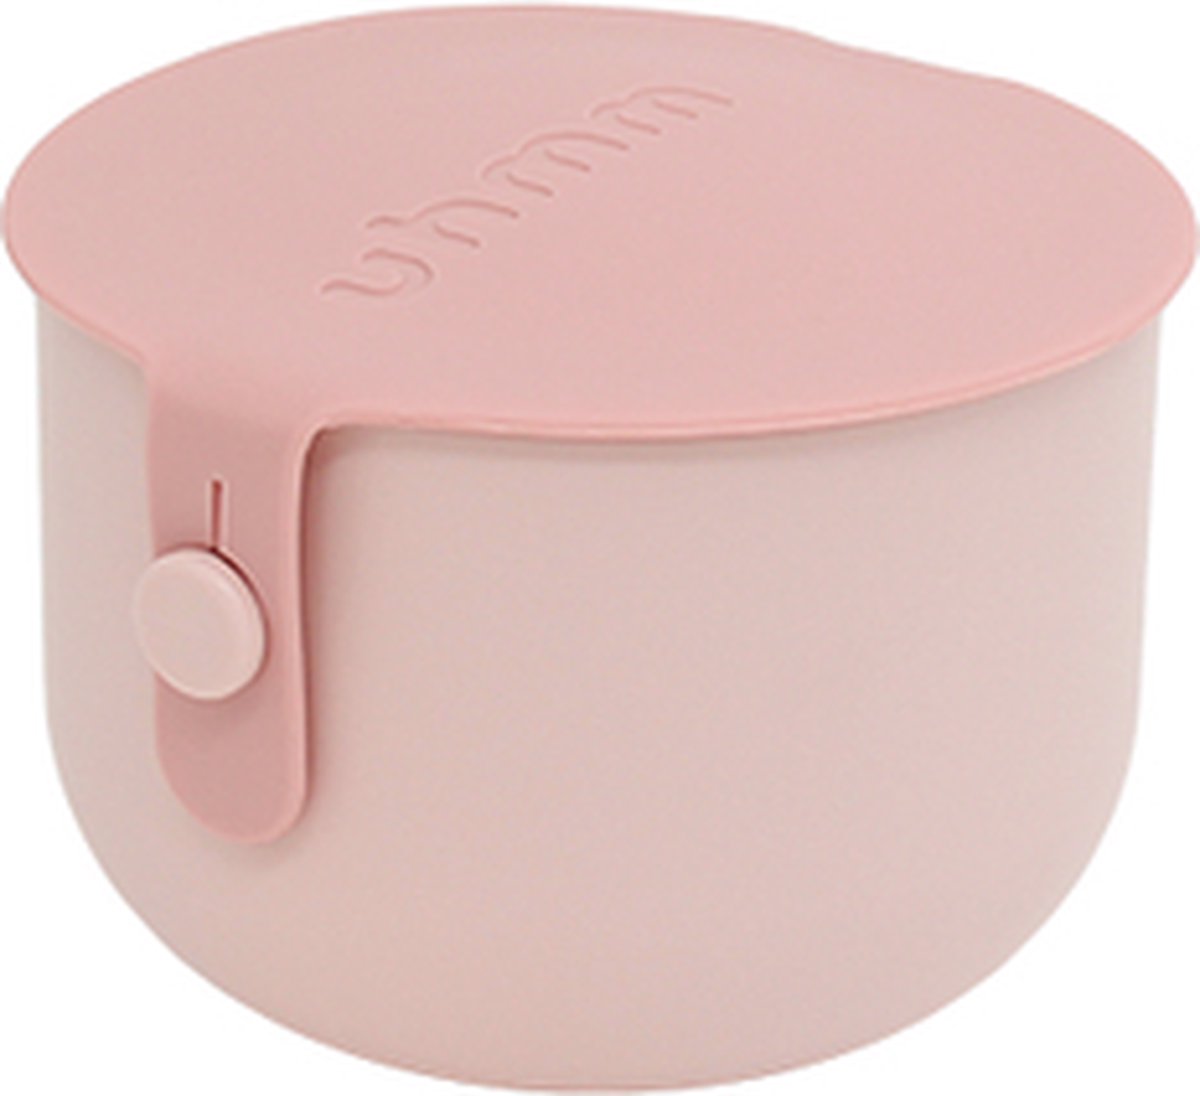 Uhmm Bowl 02 - Delicate Pink Bowl & Lid - Lunch to Go - Salade, Yoghurt, Soep - luchtdicht – 700ml - voedselveilig/food safe - geschikt voor vaatwasser, vriezer, magnetron/dishwasher, freezer, microwave safe - 100% recyclable - Deens Design